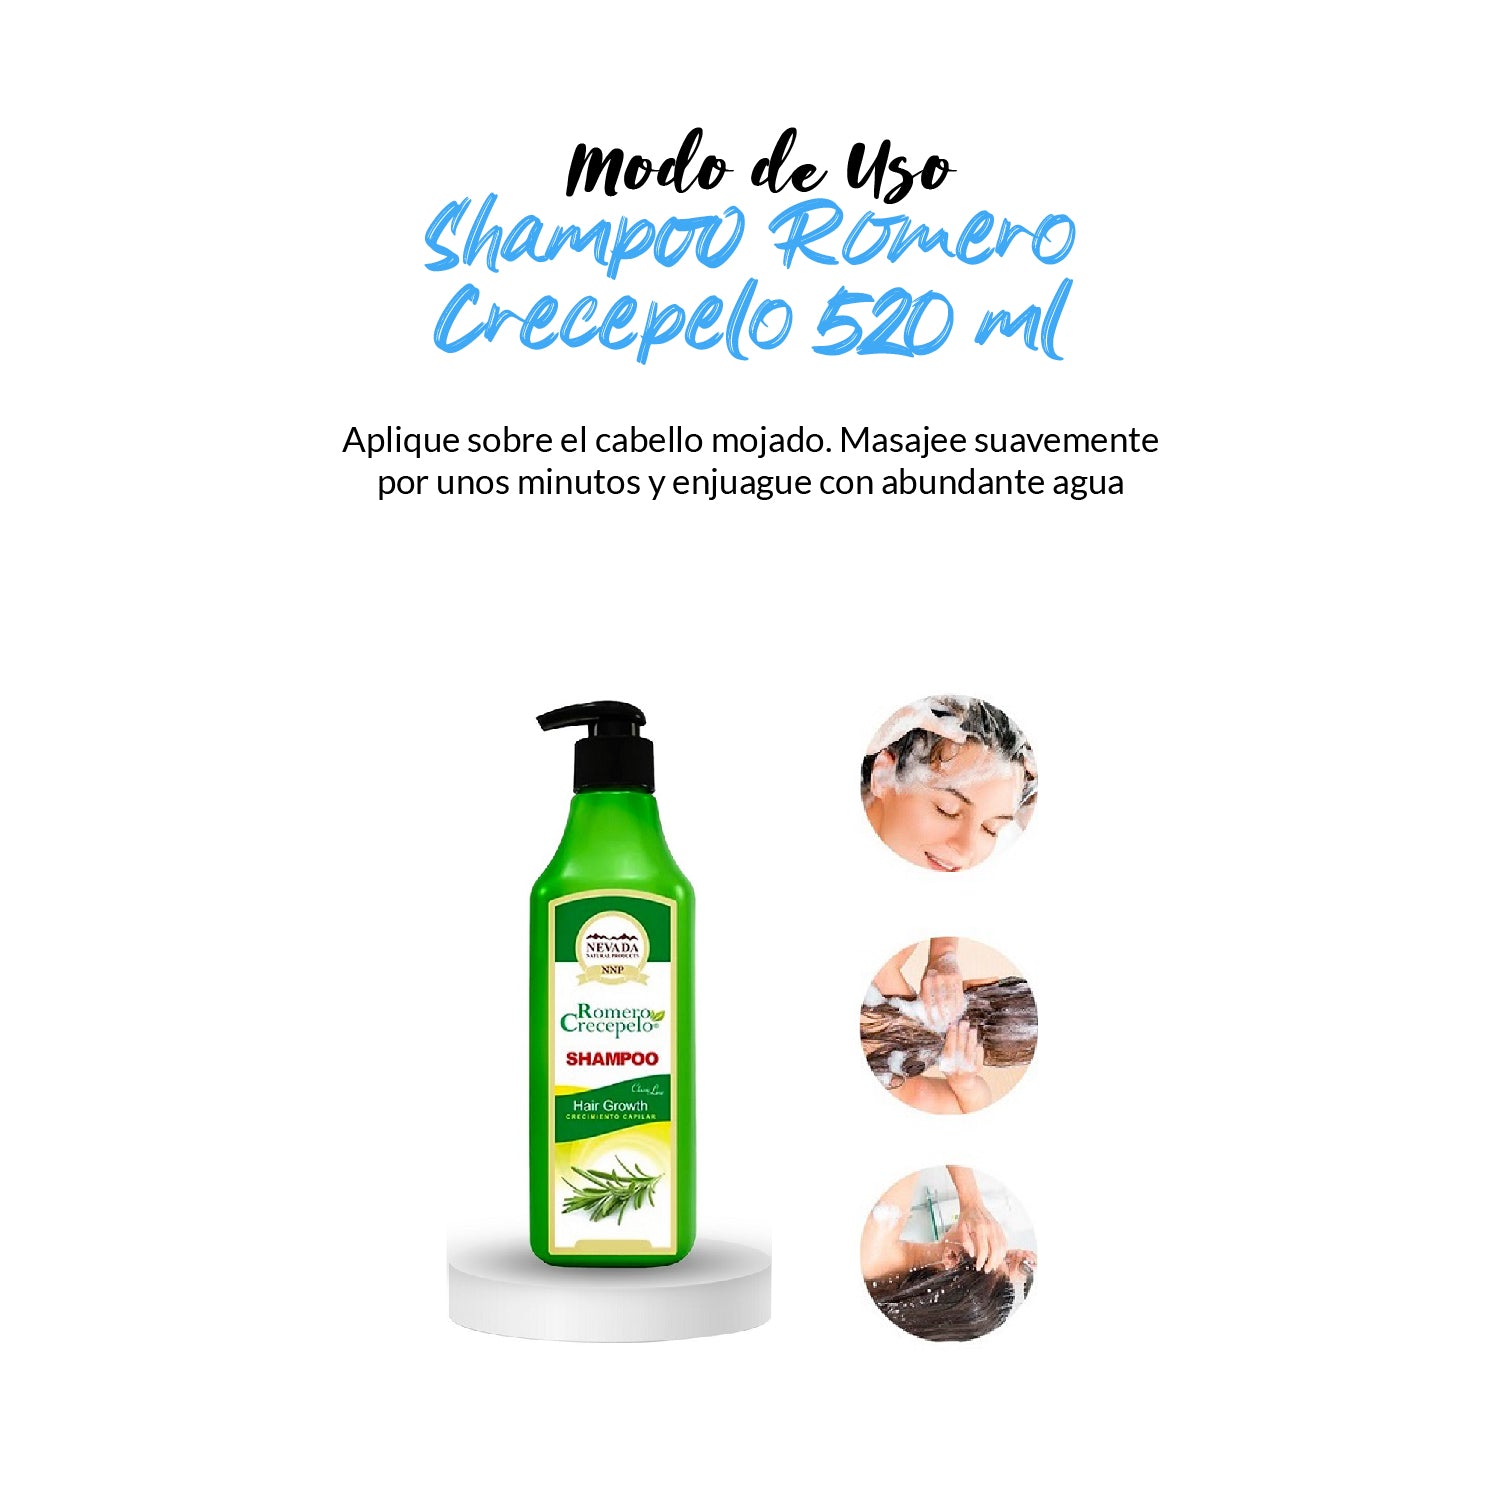 Shampoo Romero Crecepelo - NNP 520 ml